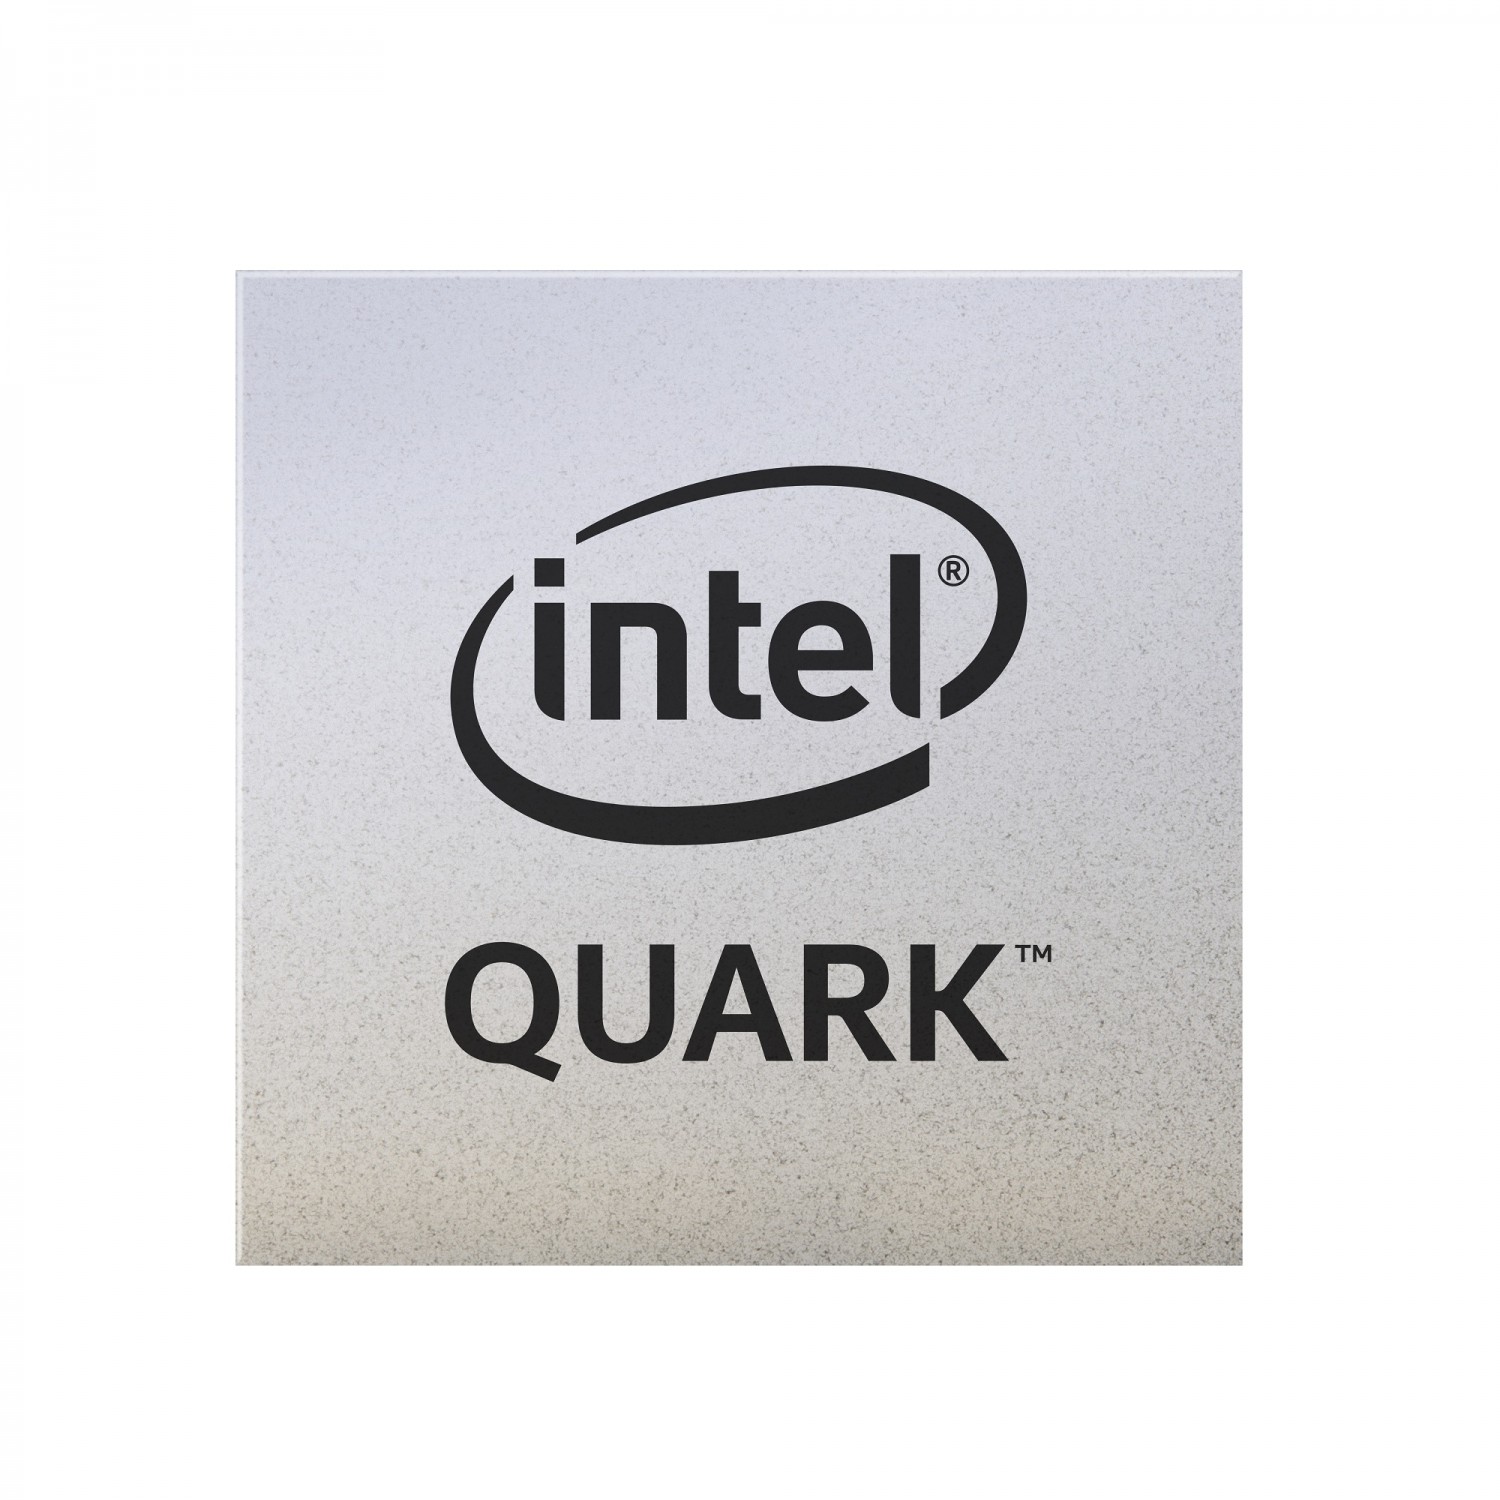 Quark SE front